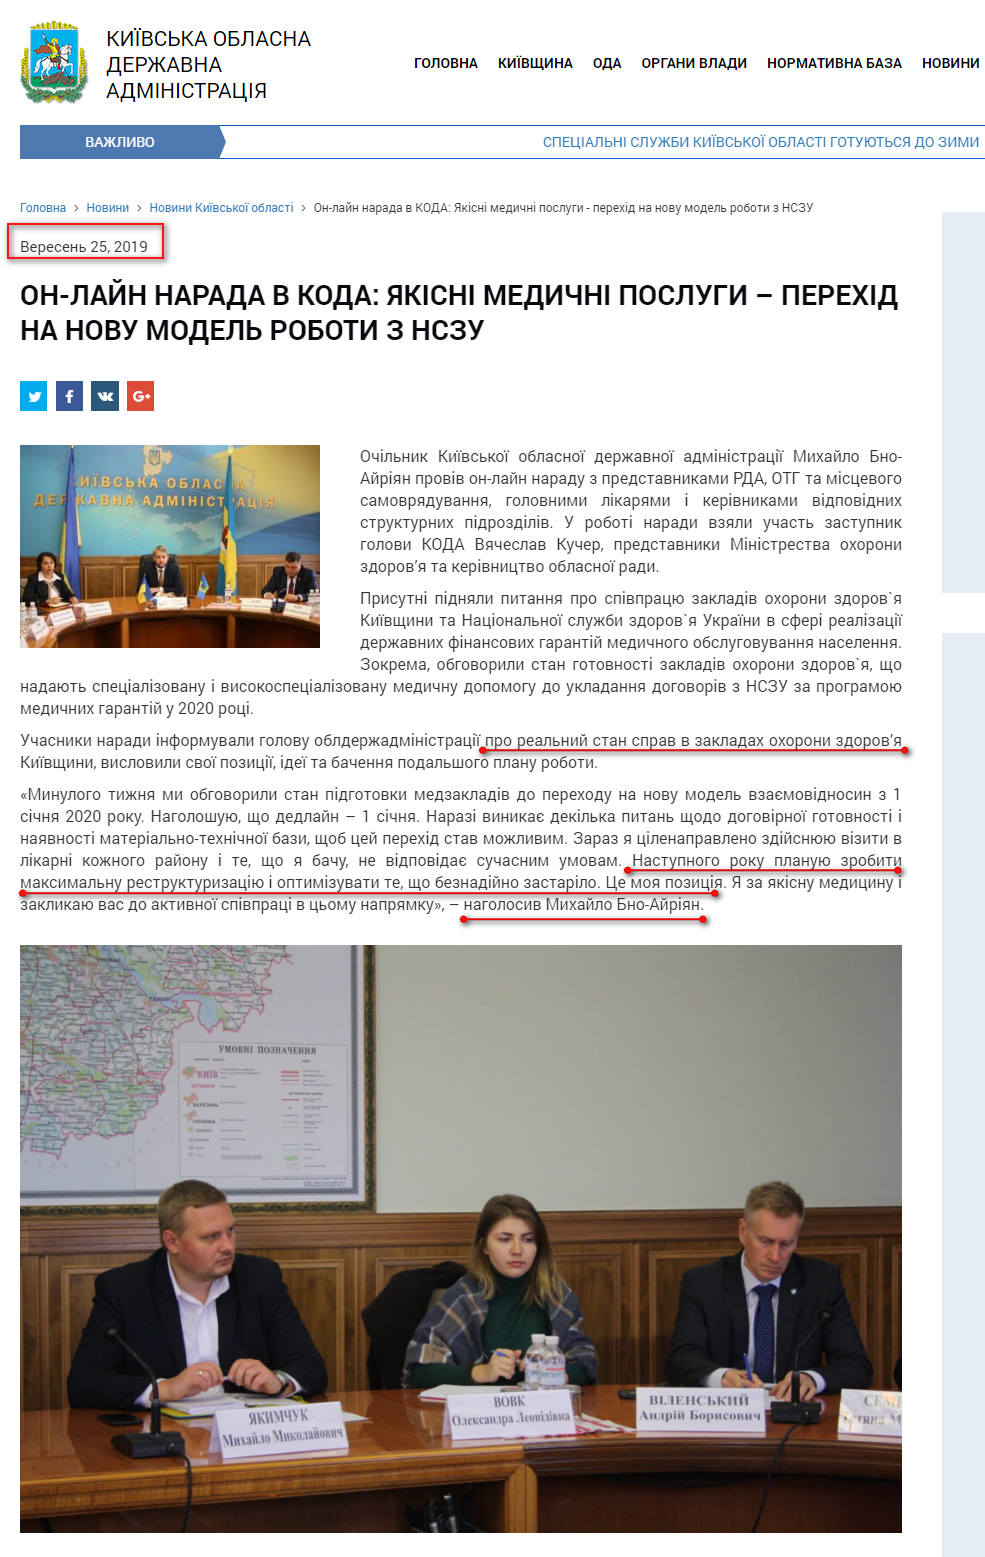 http://koda.gov.ua/news/on-layn-narada-v-koda-yakisni-medichni-po/